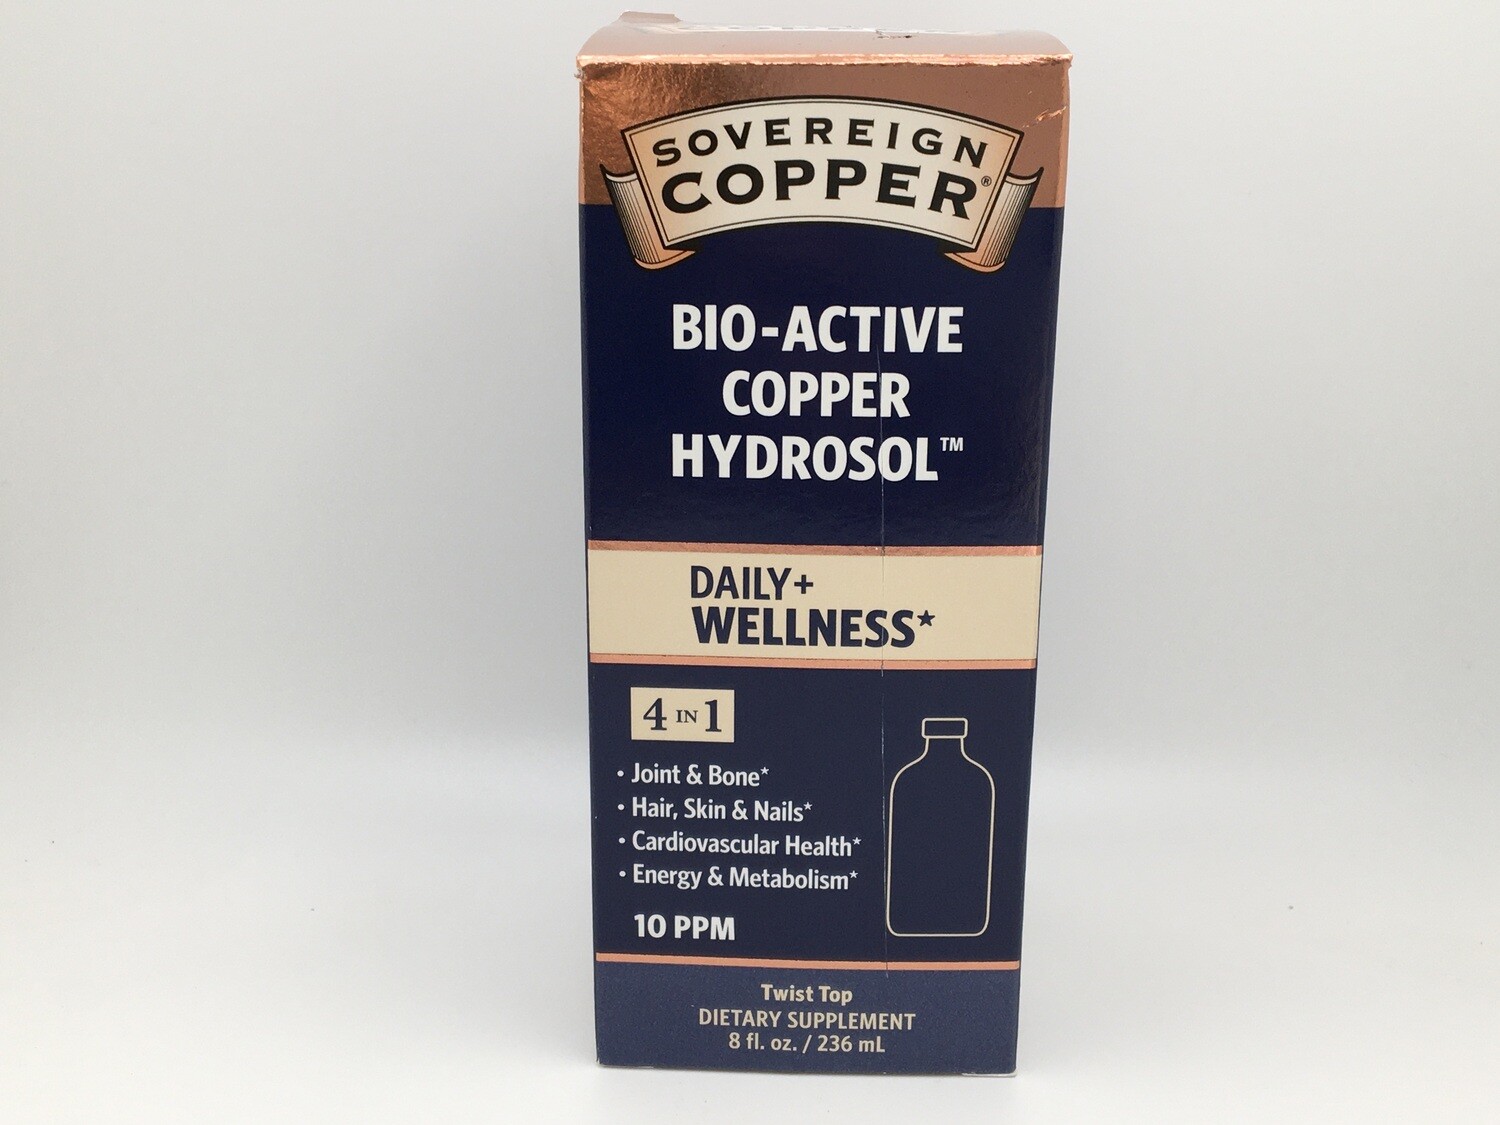 Bio Active Copper Hydrosol 8oz Bottle(Sovereign)